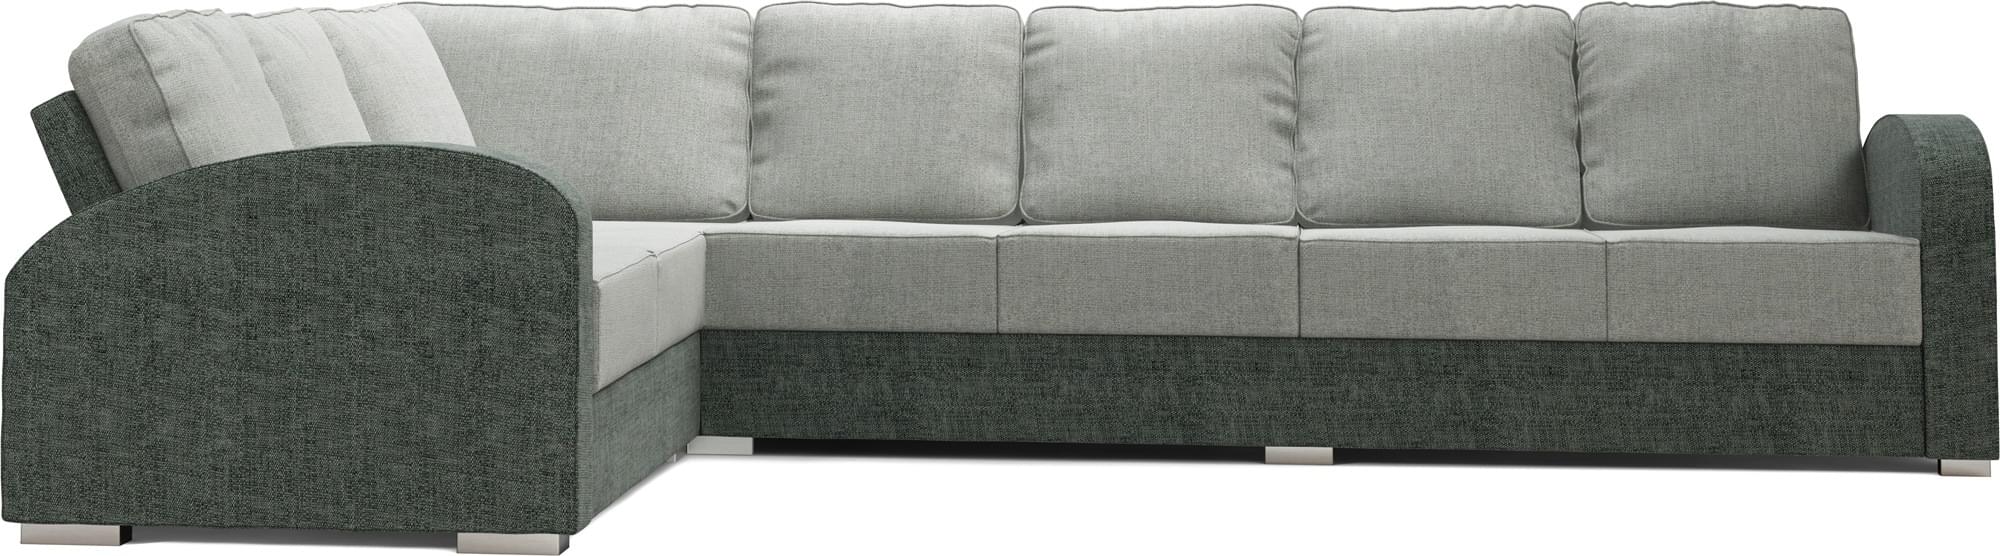 Orb 5X3 Corner Single Sofa Bed